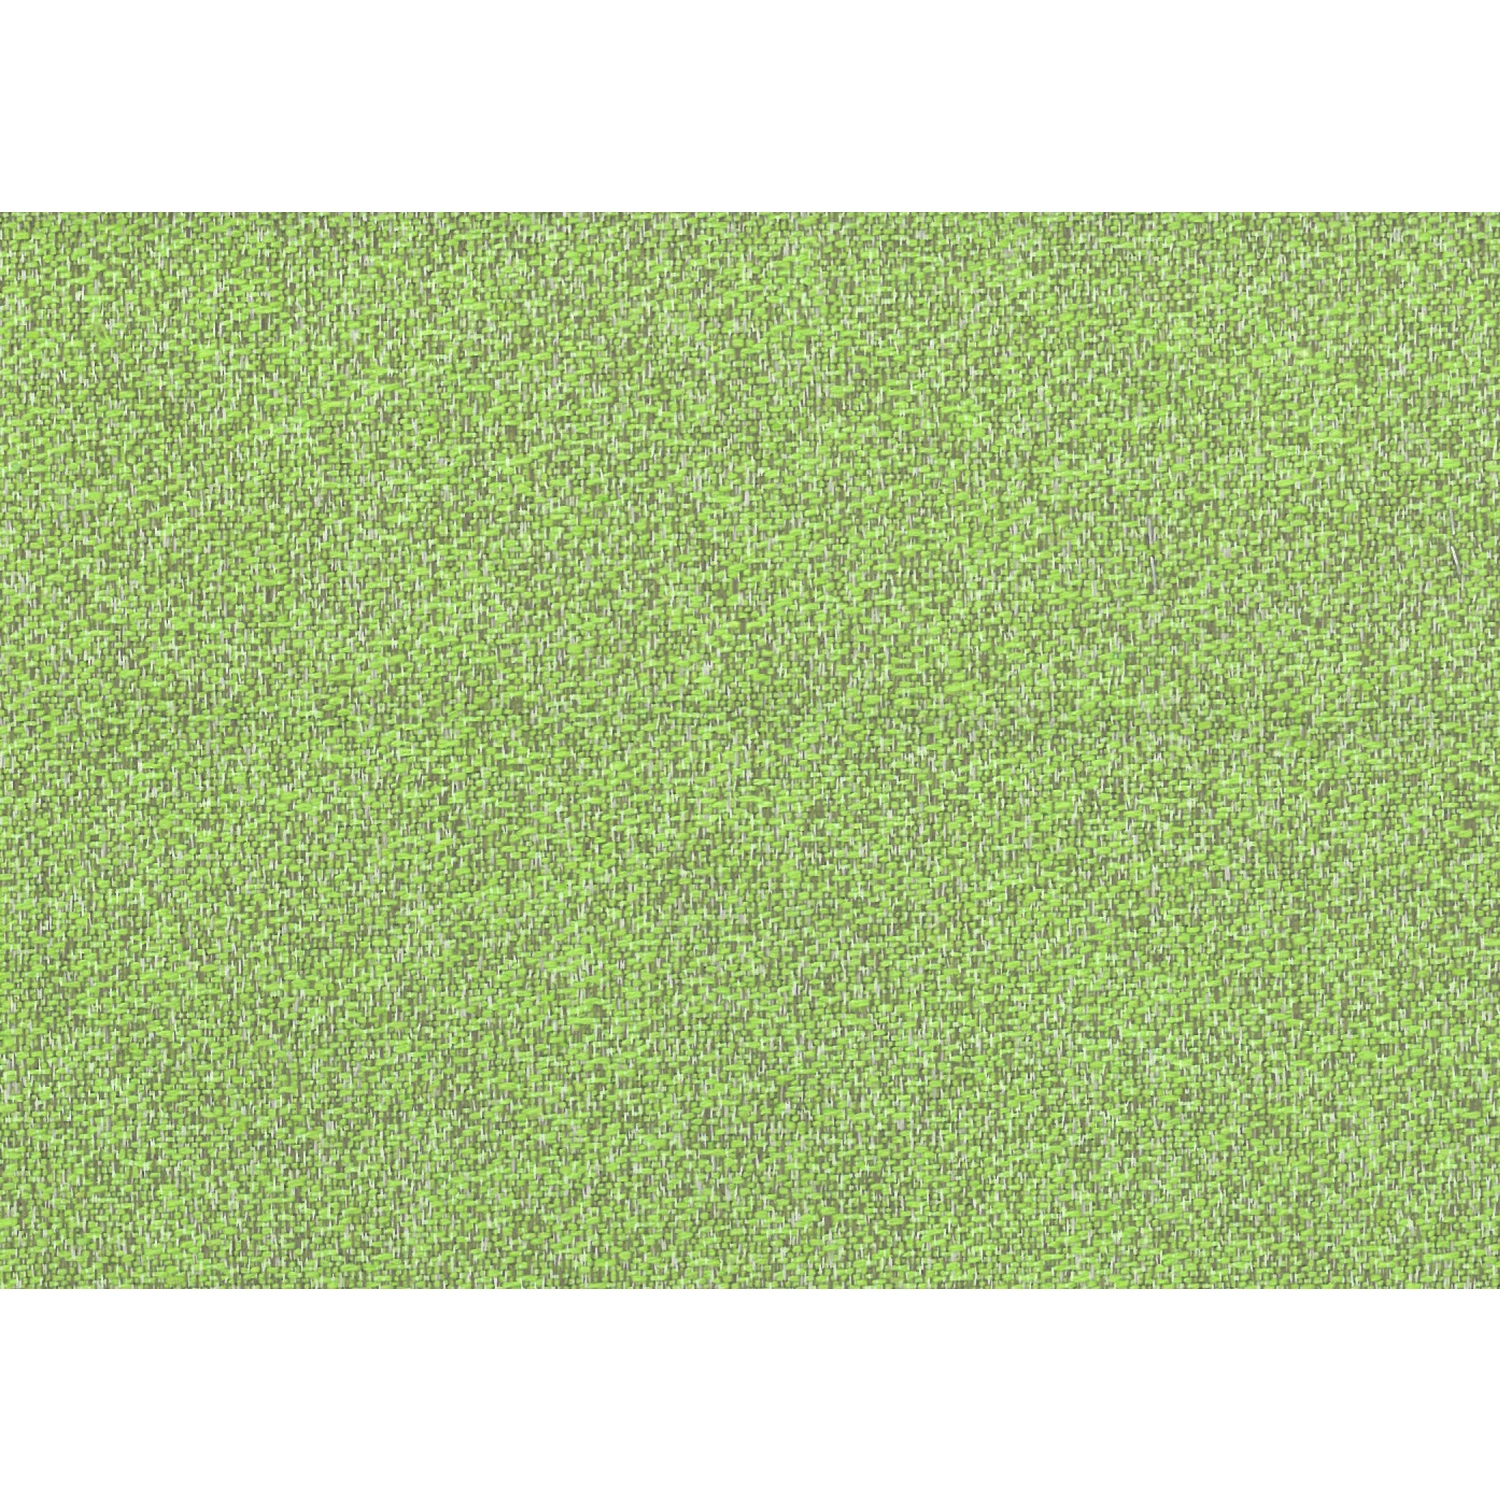 BEST Sesselauflage »Soft-Line«, grün, BxL: 50 x 120 cm